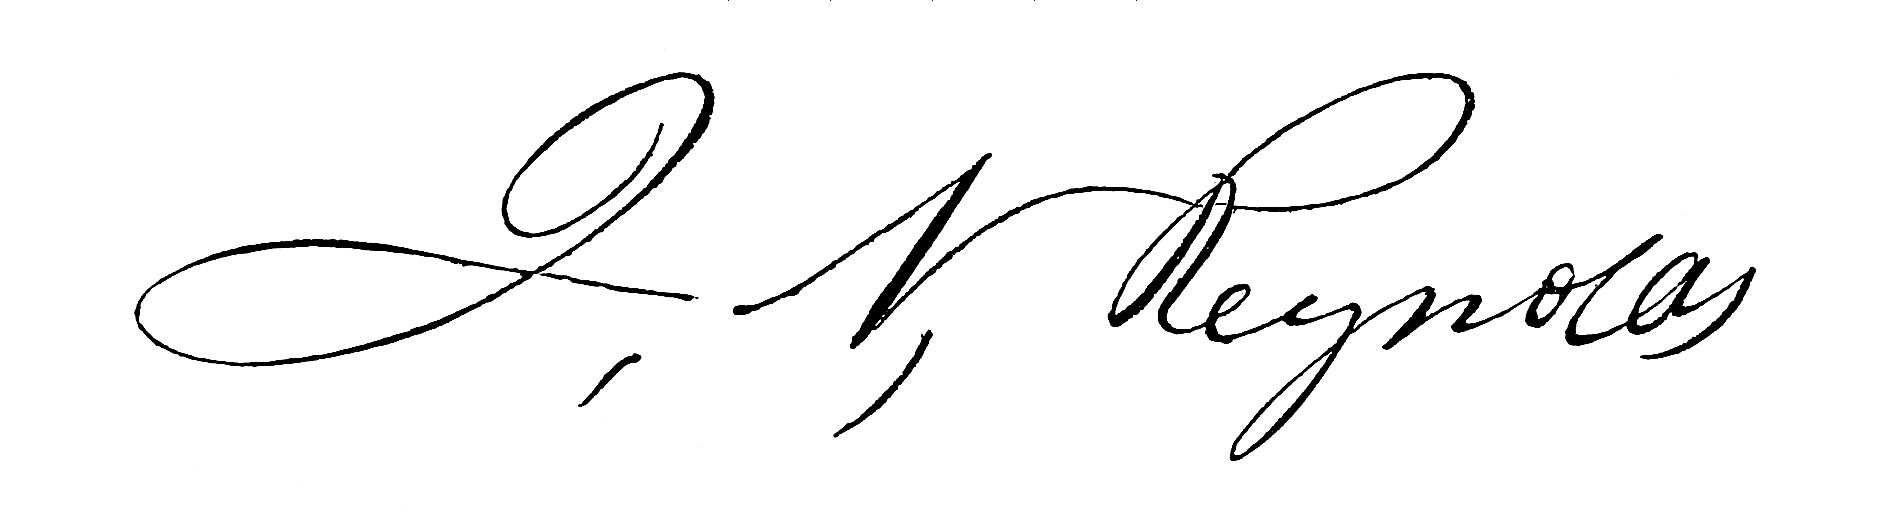 Signature of J. N. Reynolds